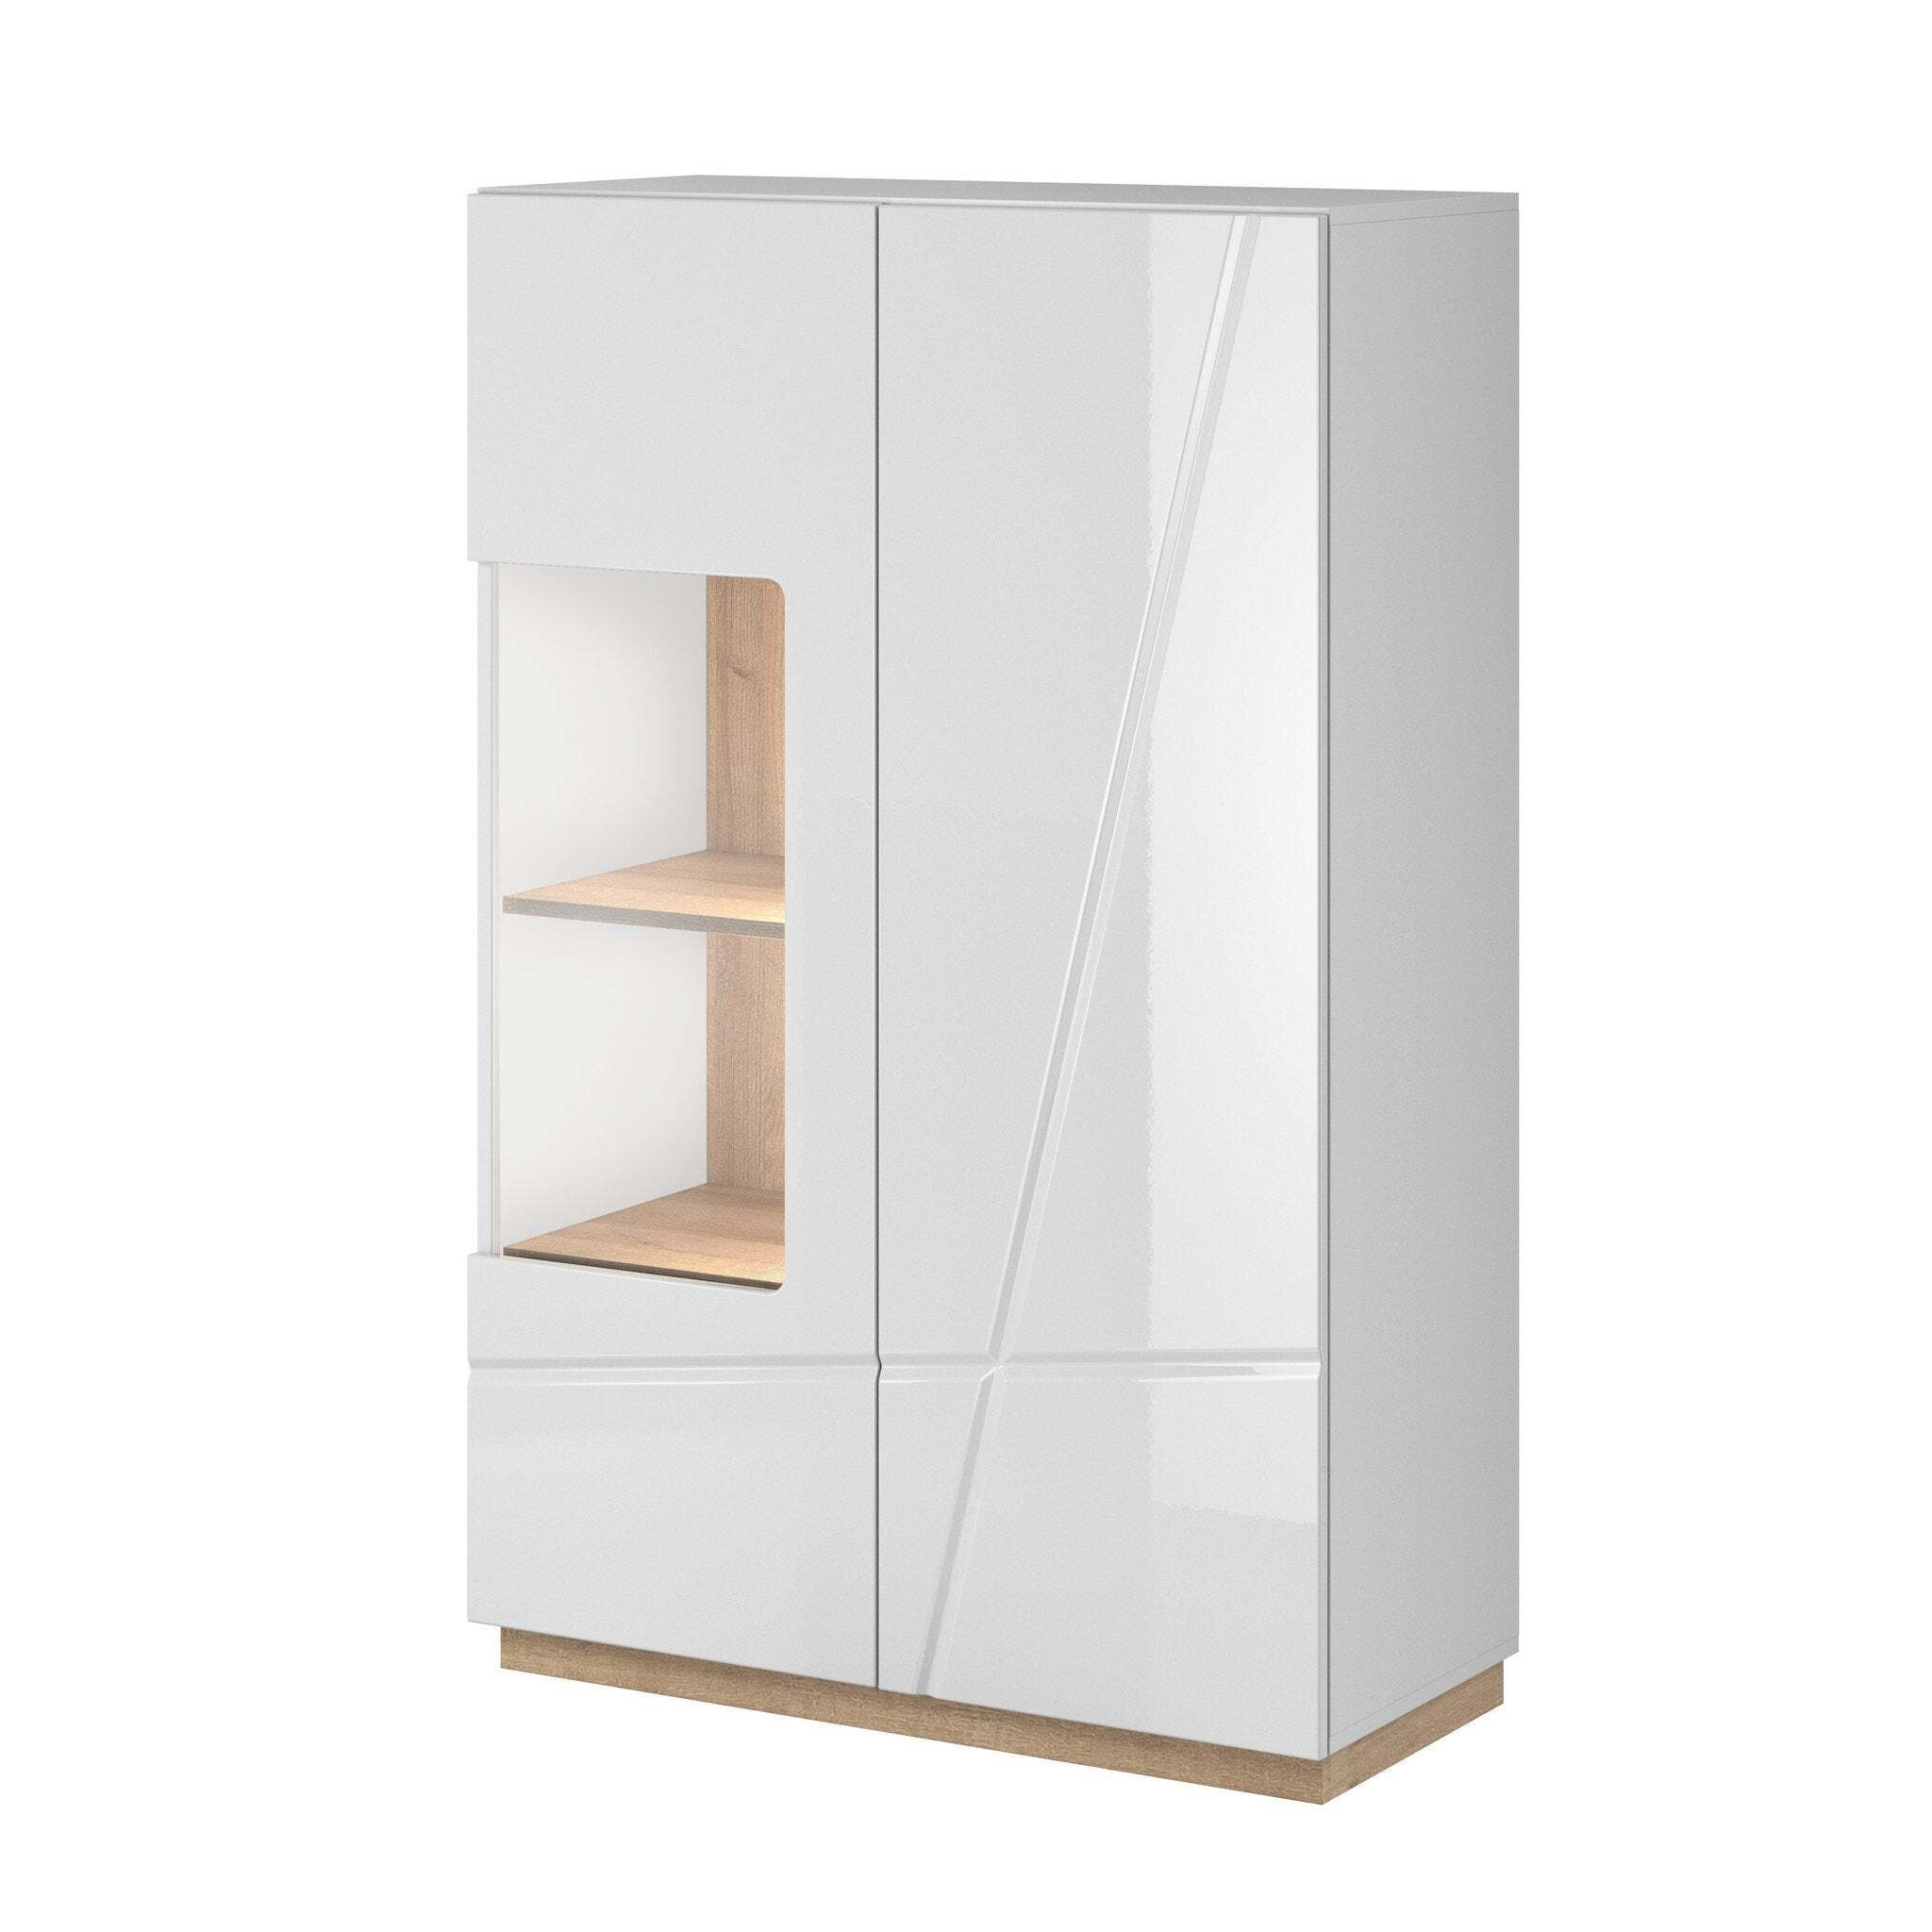 Futura FU-05 Display Cabinet 90cm - White Gloss 90cm - image 1